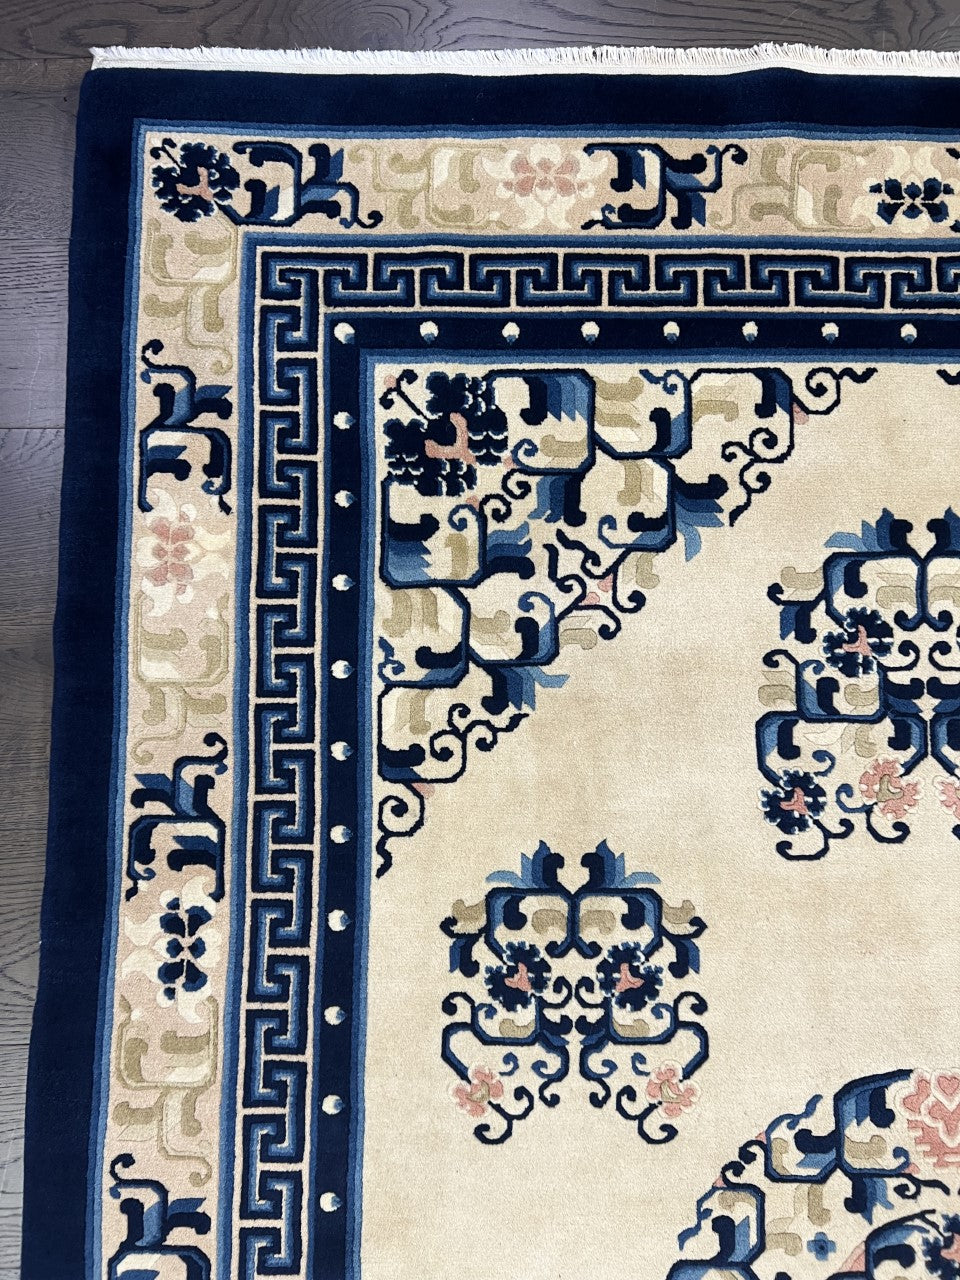 Wonderful vintage Chinese Pecking rug